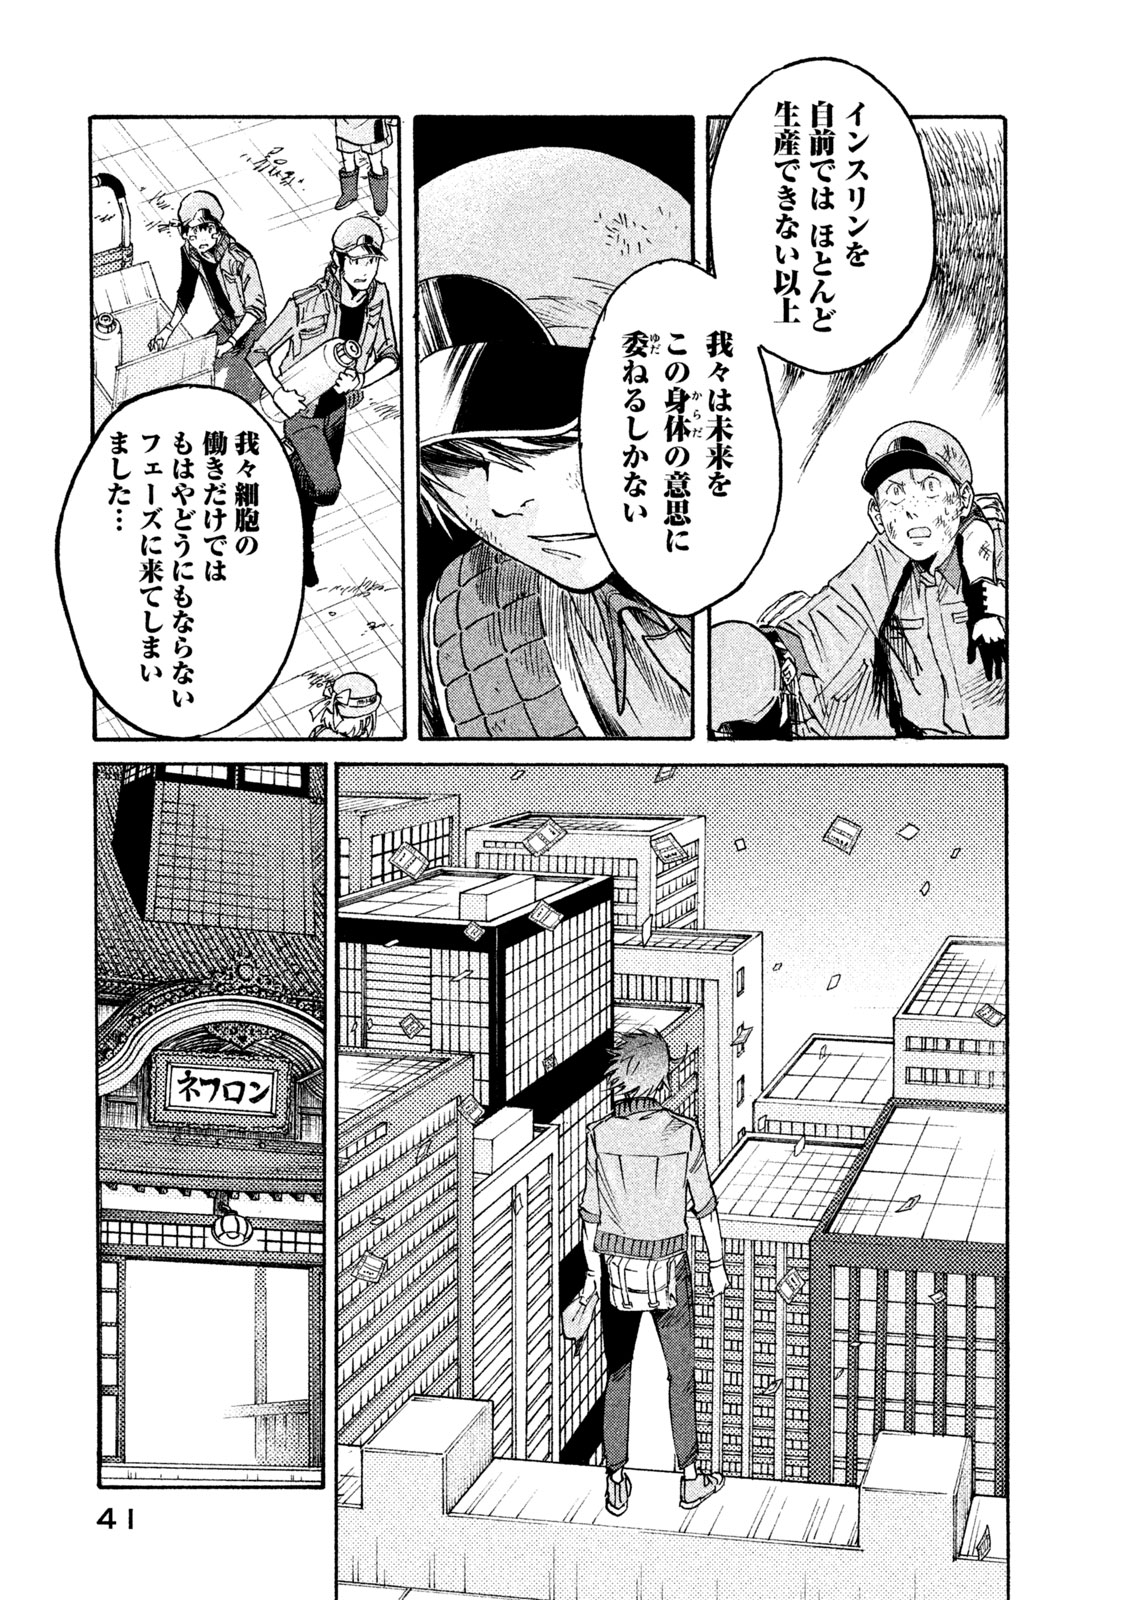 Hataraku Saibou BLACK - Chapter 26 - Page 19